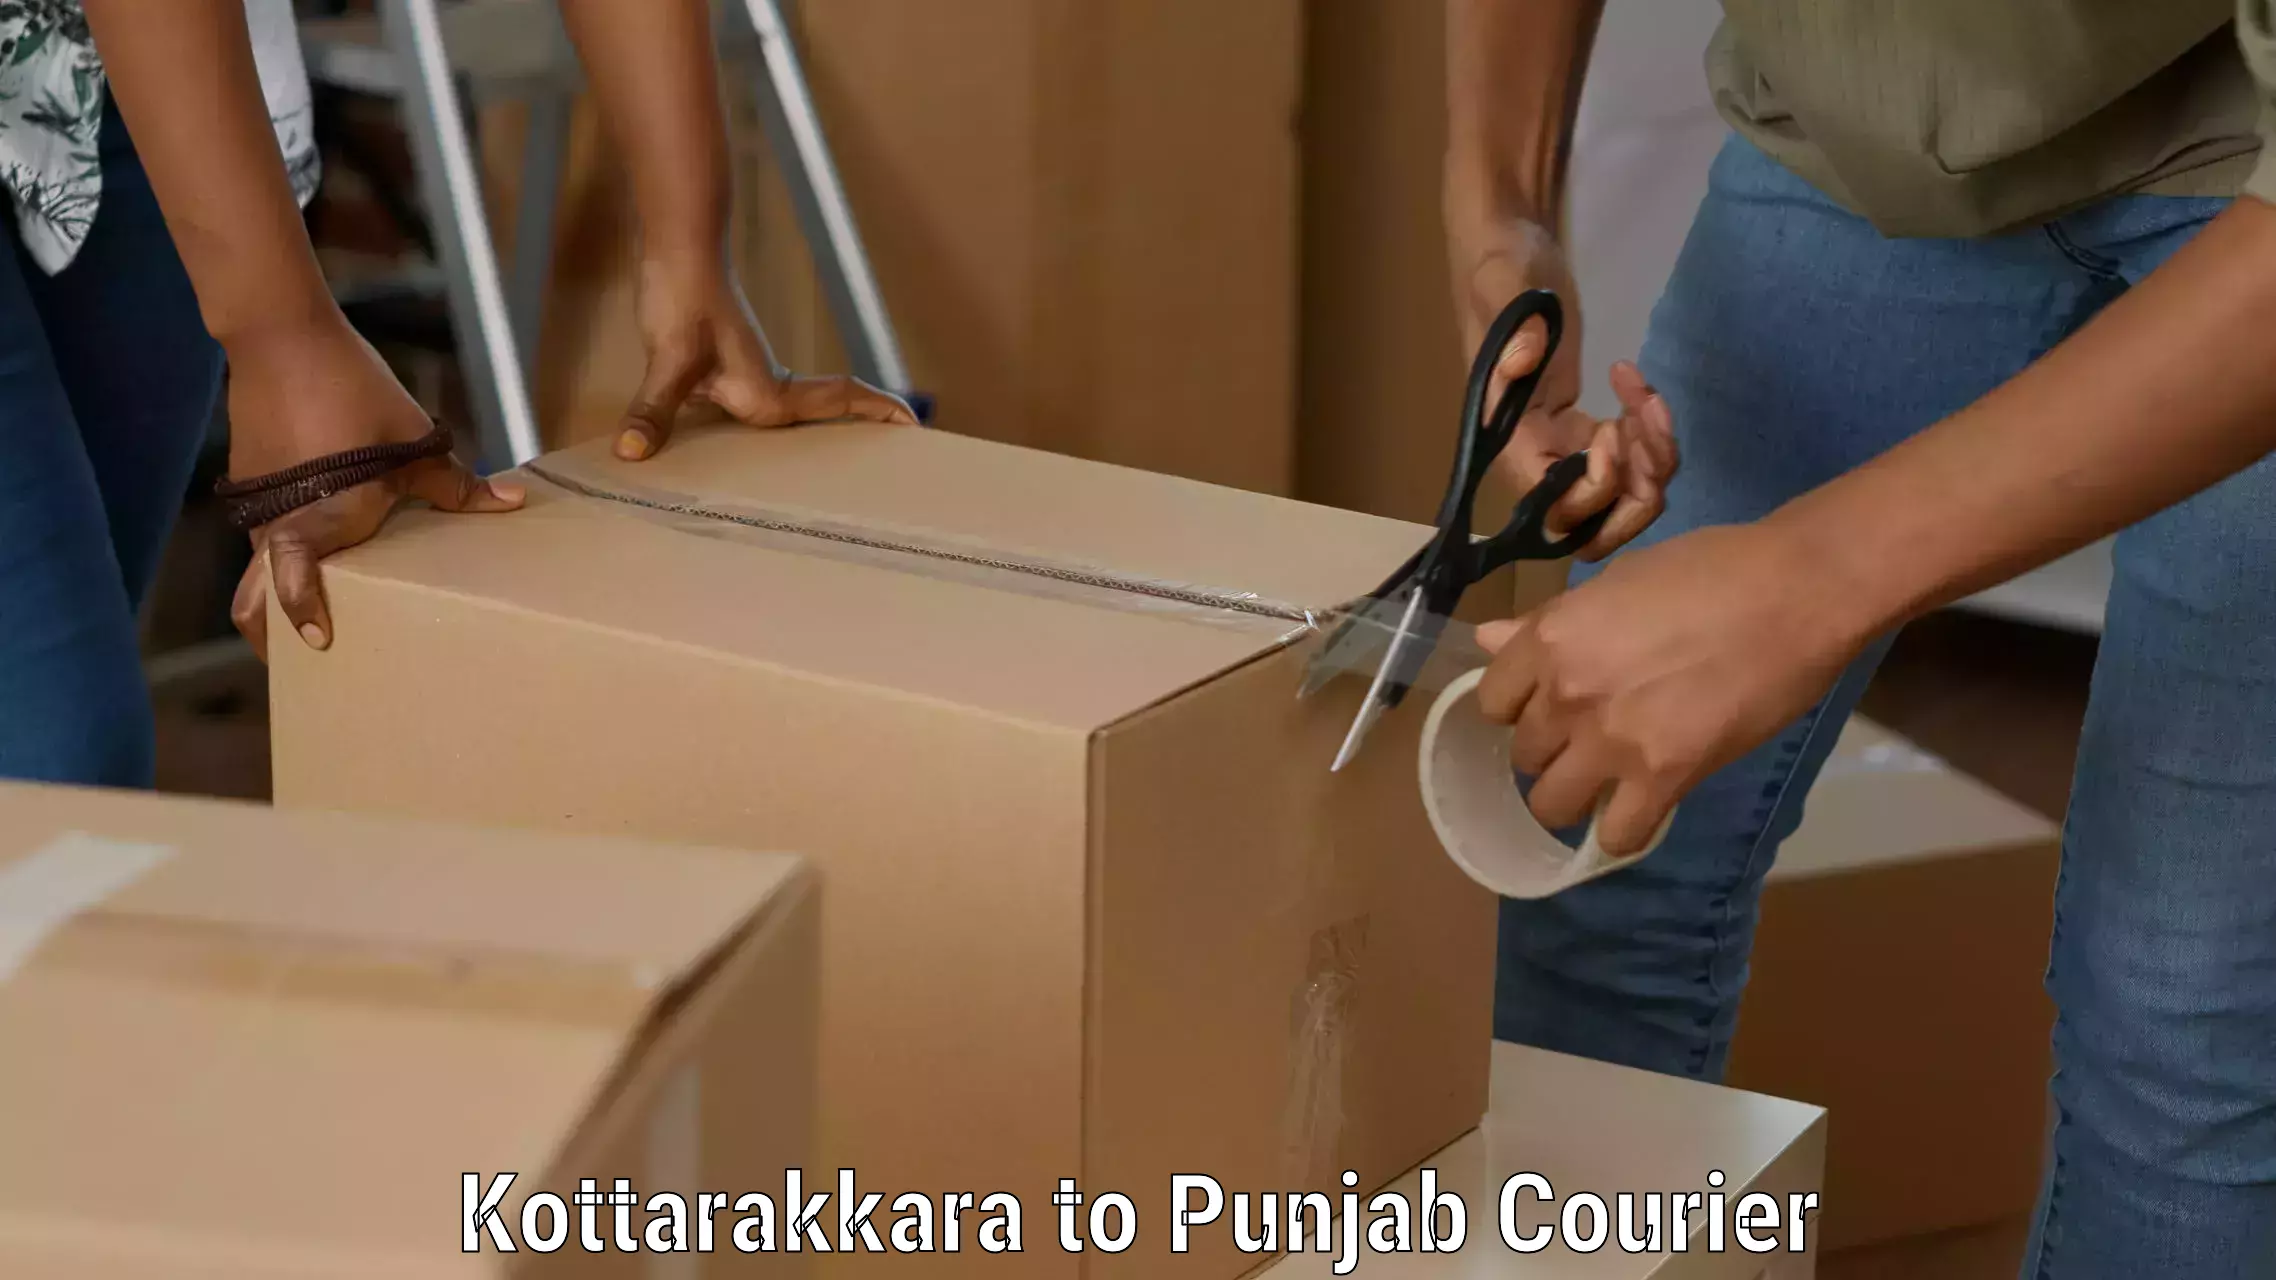 On-demand shipping options Kottarakkara to Punjab